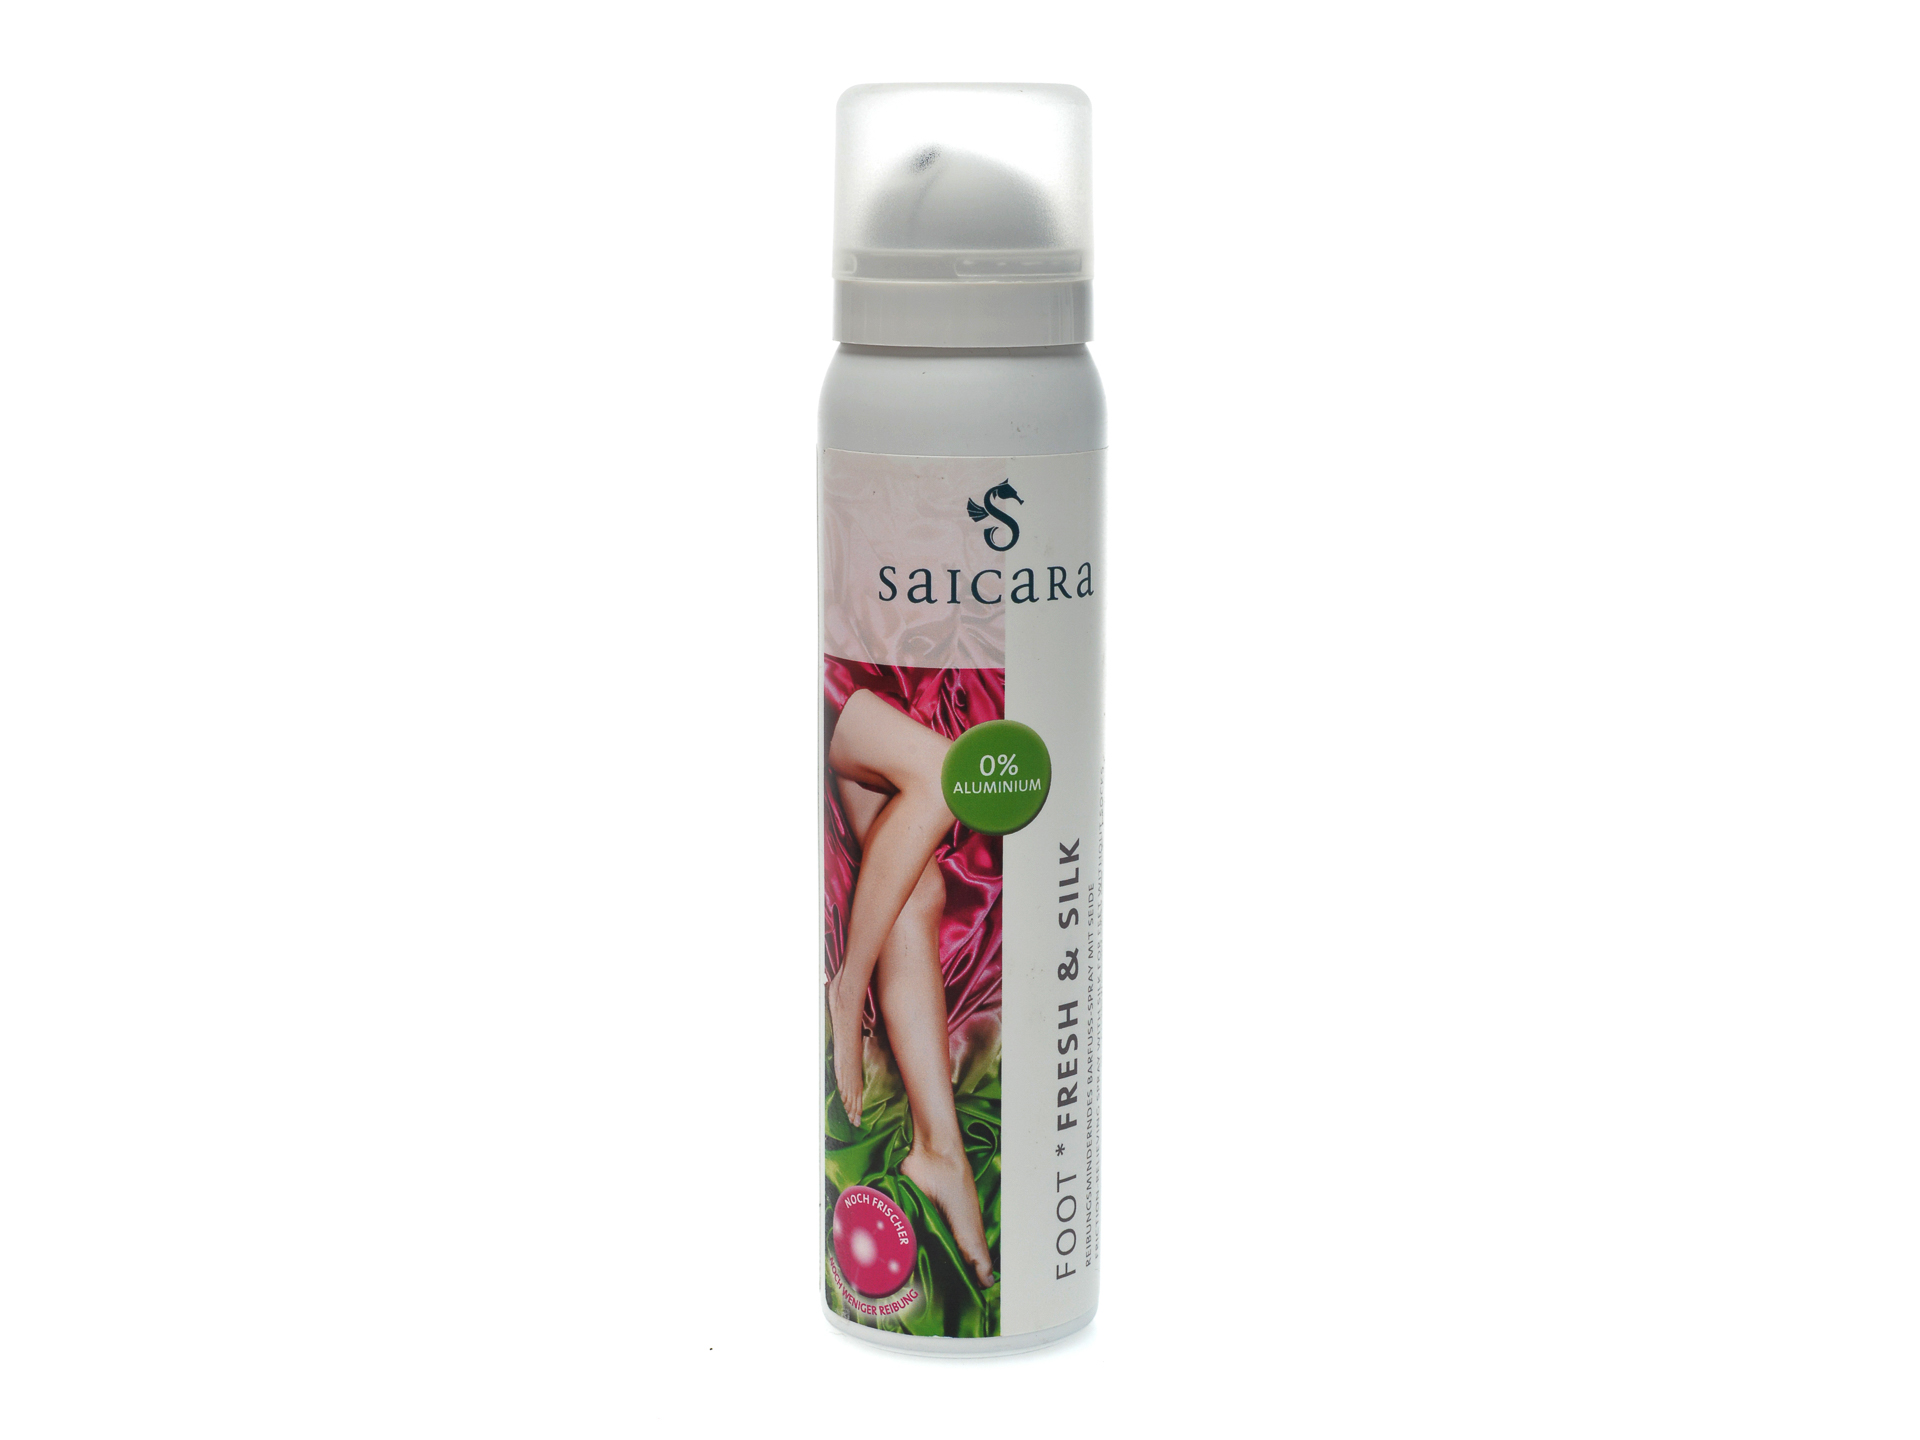 Spray-deodorant pentru picioare, Solitaire imagine otter.ro 2021